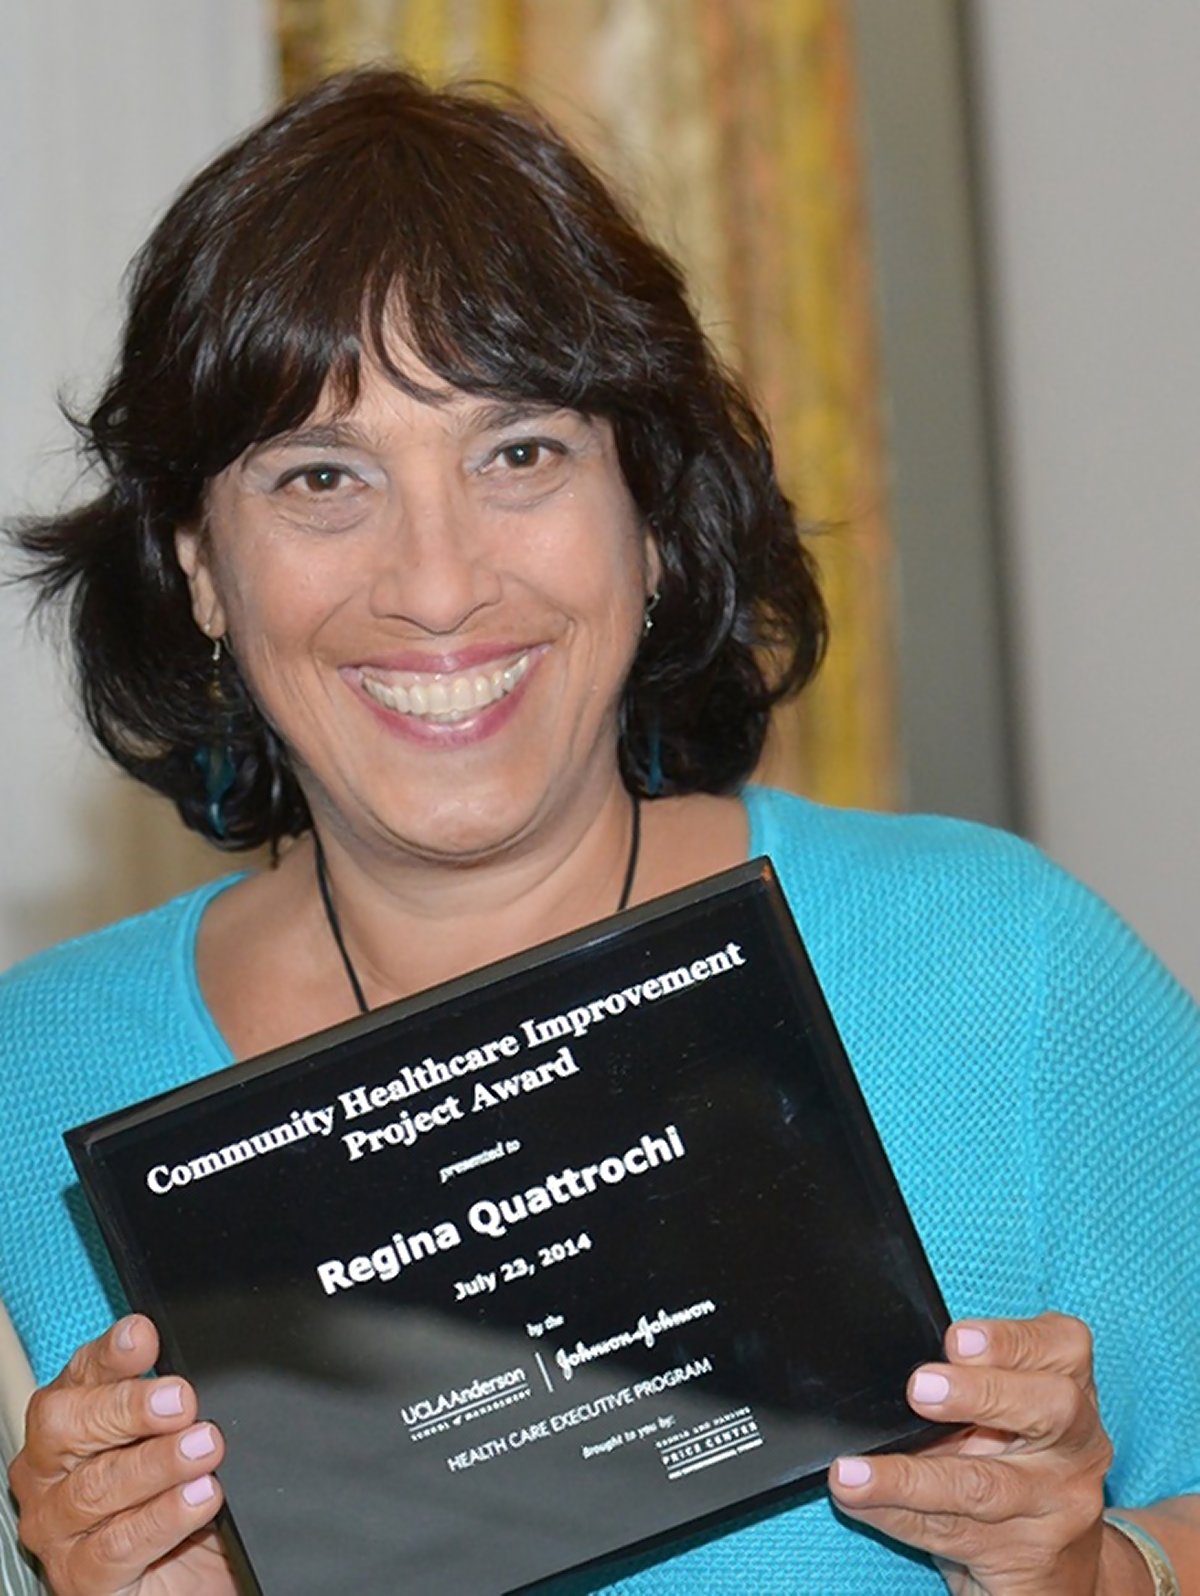 Gina Quattrochi receiving an award in 2014.